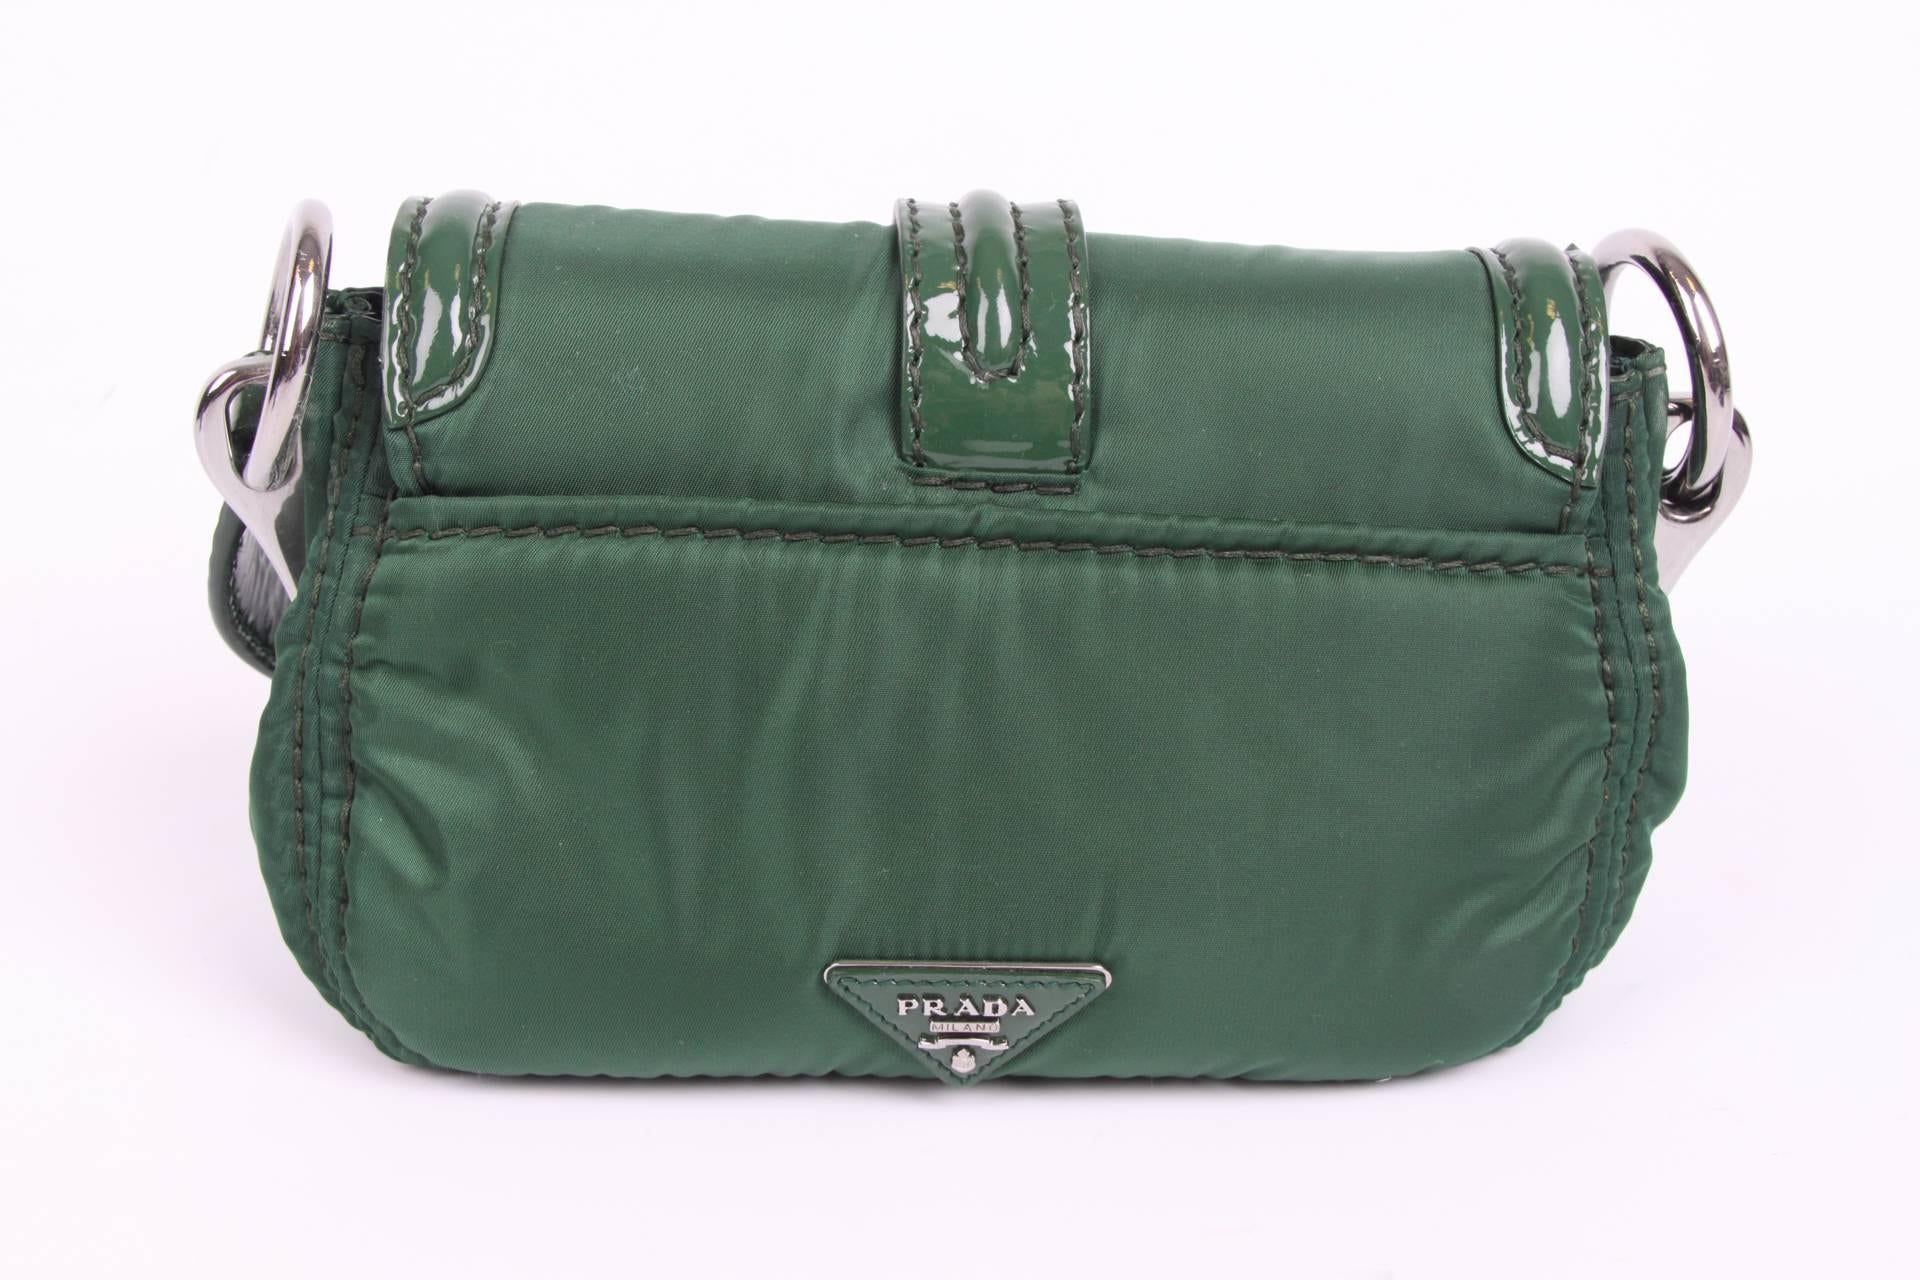 Prada Pattina Sottospalla Handbag - green  In New Condition For Sale In Baarn, NL